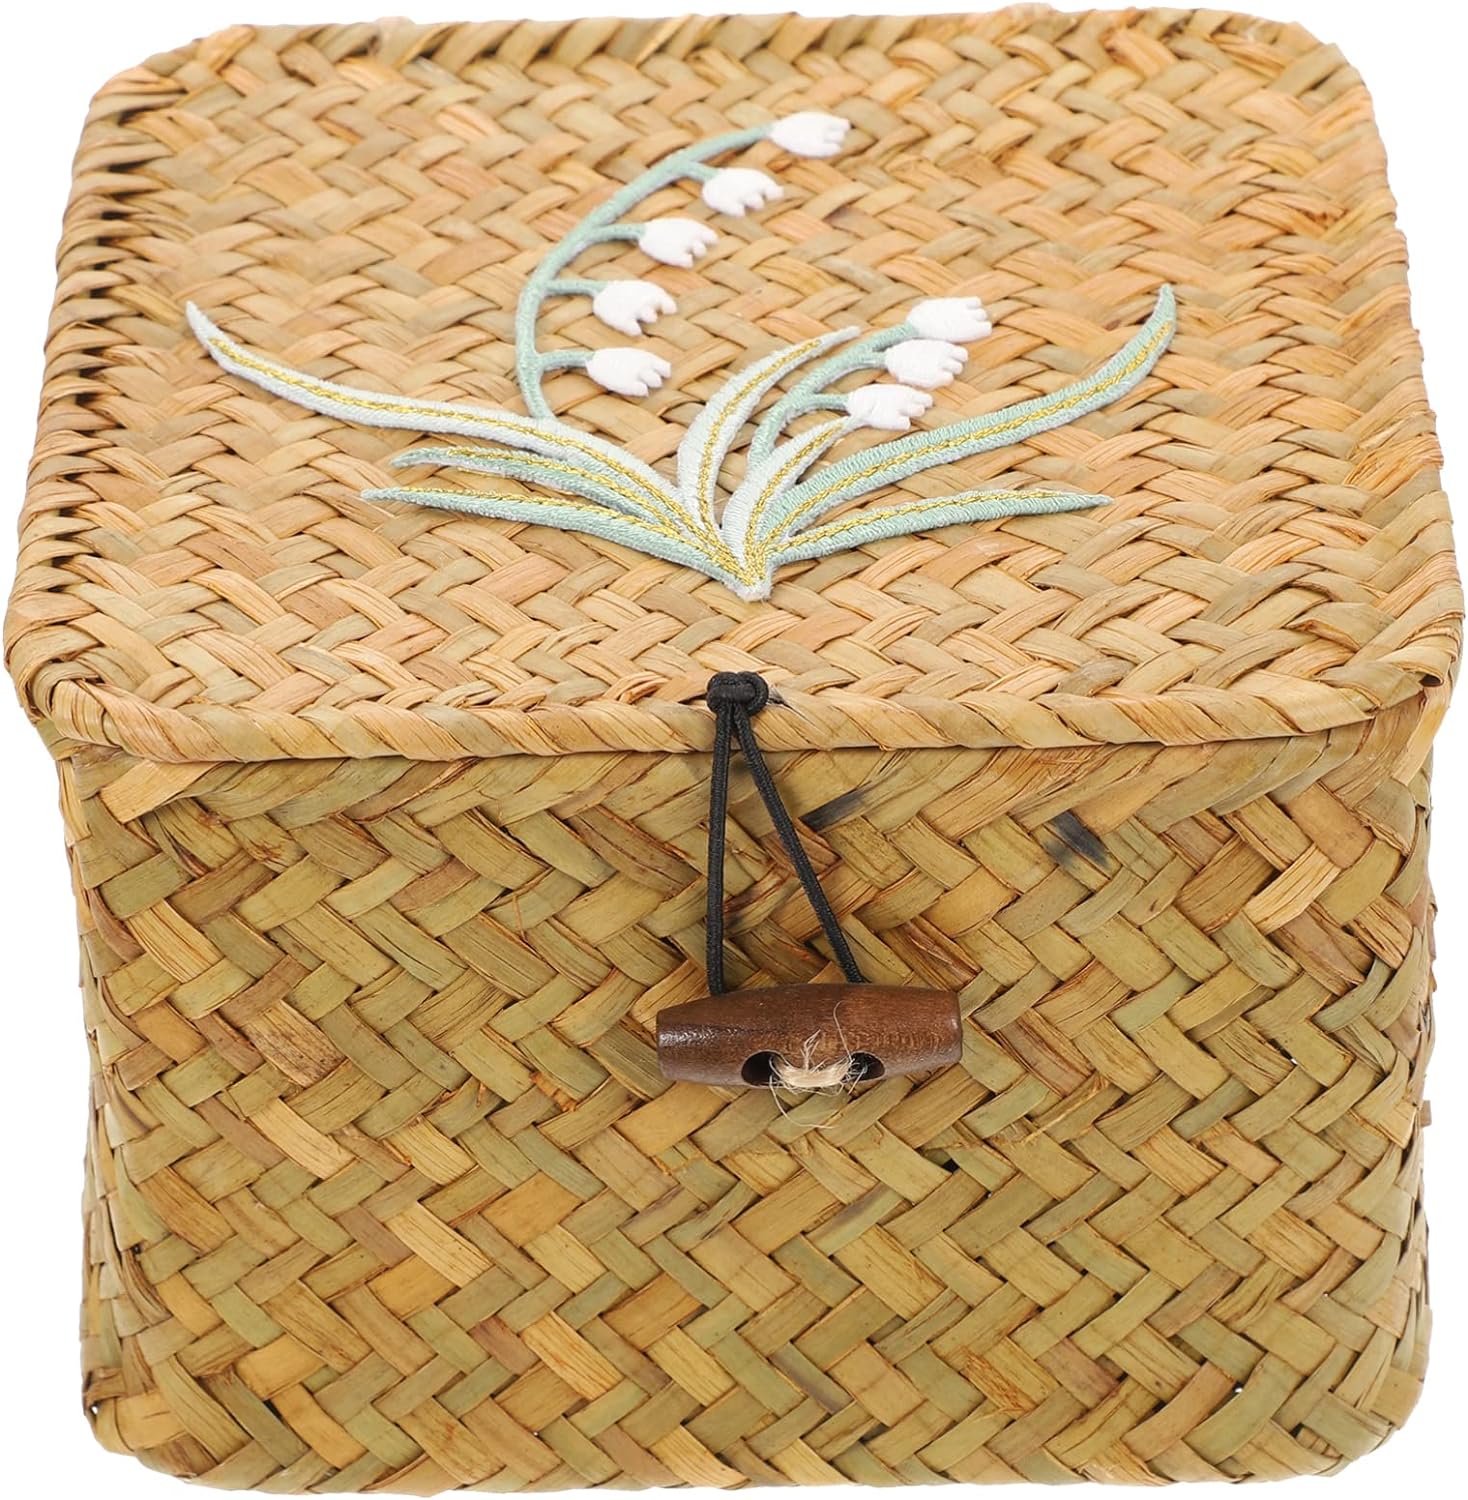 Zerodeko Seagrass Weaving Storage Box Wicker Storage Baskets Wicker Cubes Rattan Shelf Basket Cube Storage Square Embroidery Pattern Baskets Handwoven Organizer with Lid S